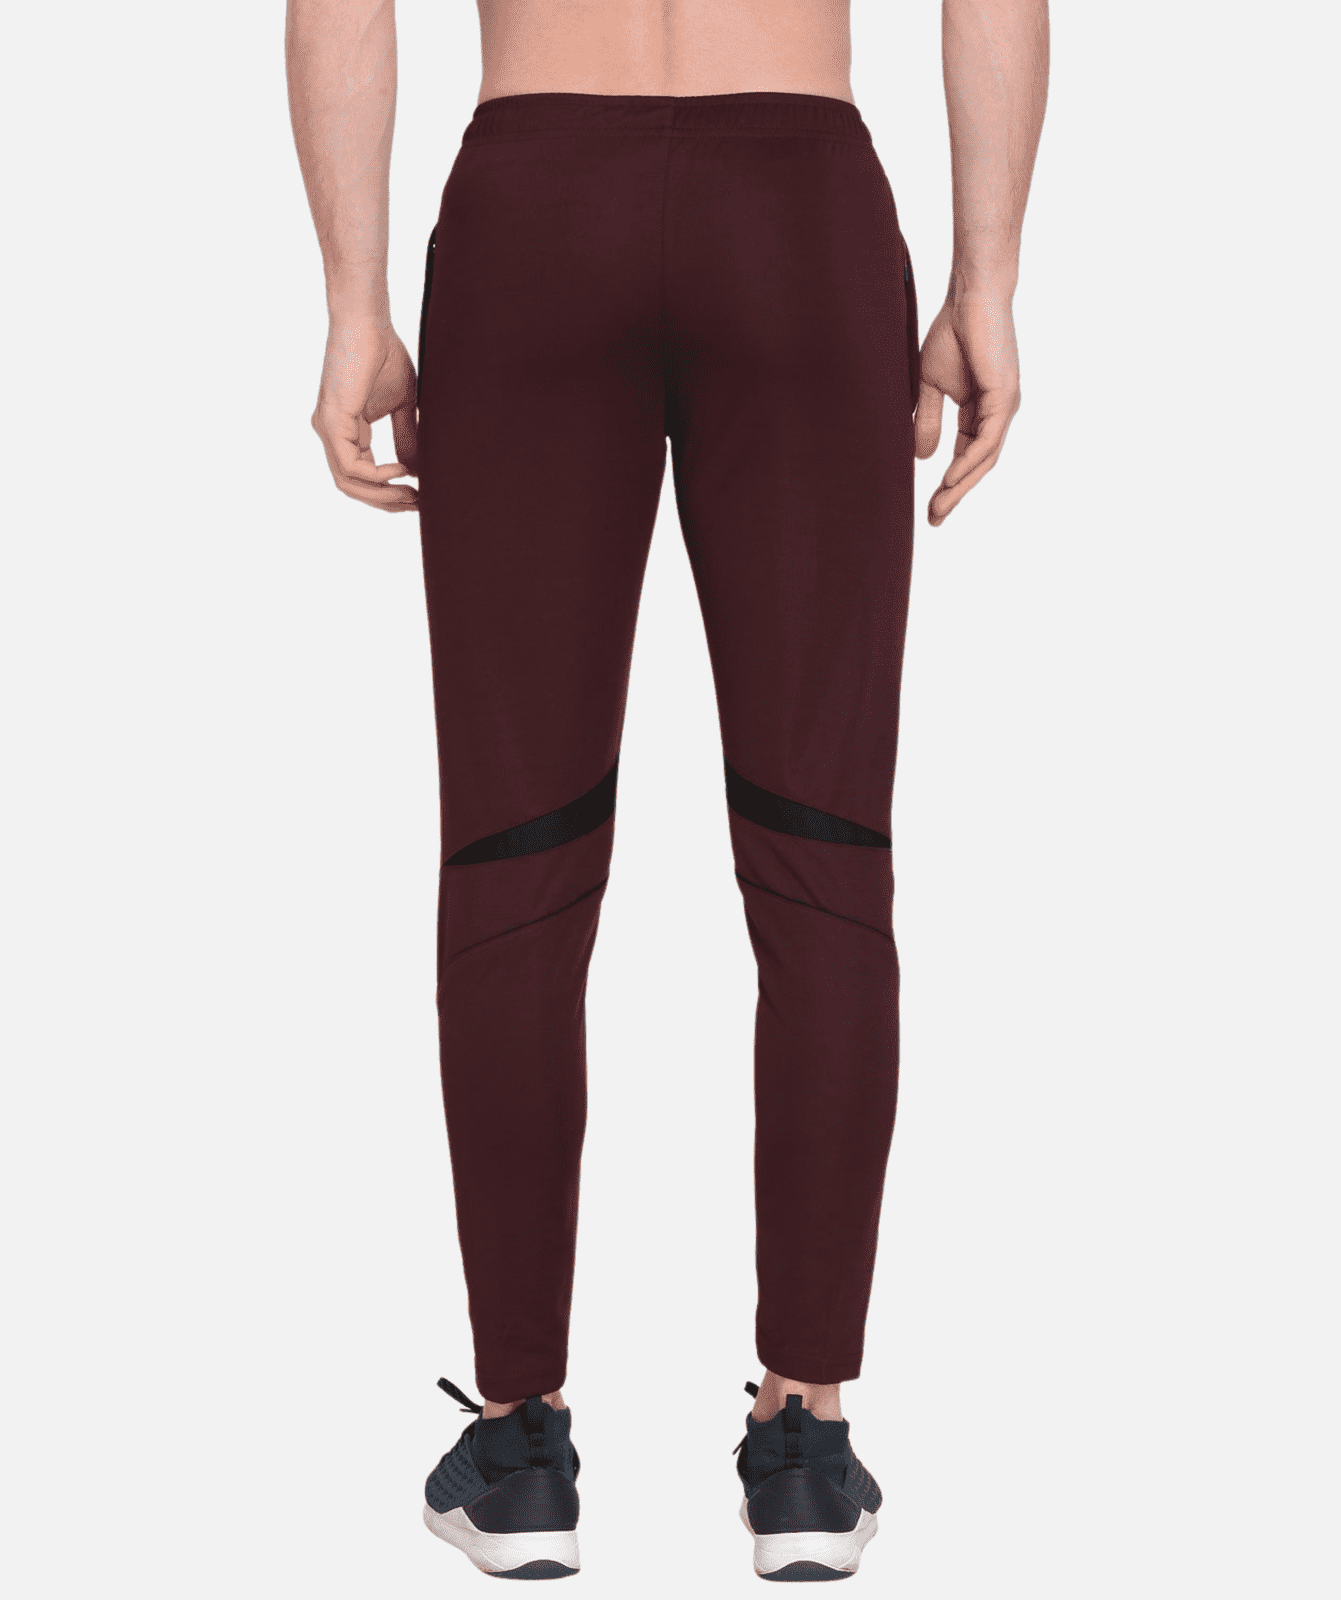 Buy Plus 91 Latest Men Cargo Solid Danim Joggers Trousers Streetwear cross  6 multi Pockets Design Pants (30, Dark Green) at Amazon.in